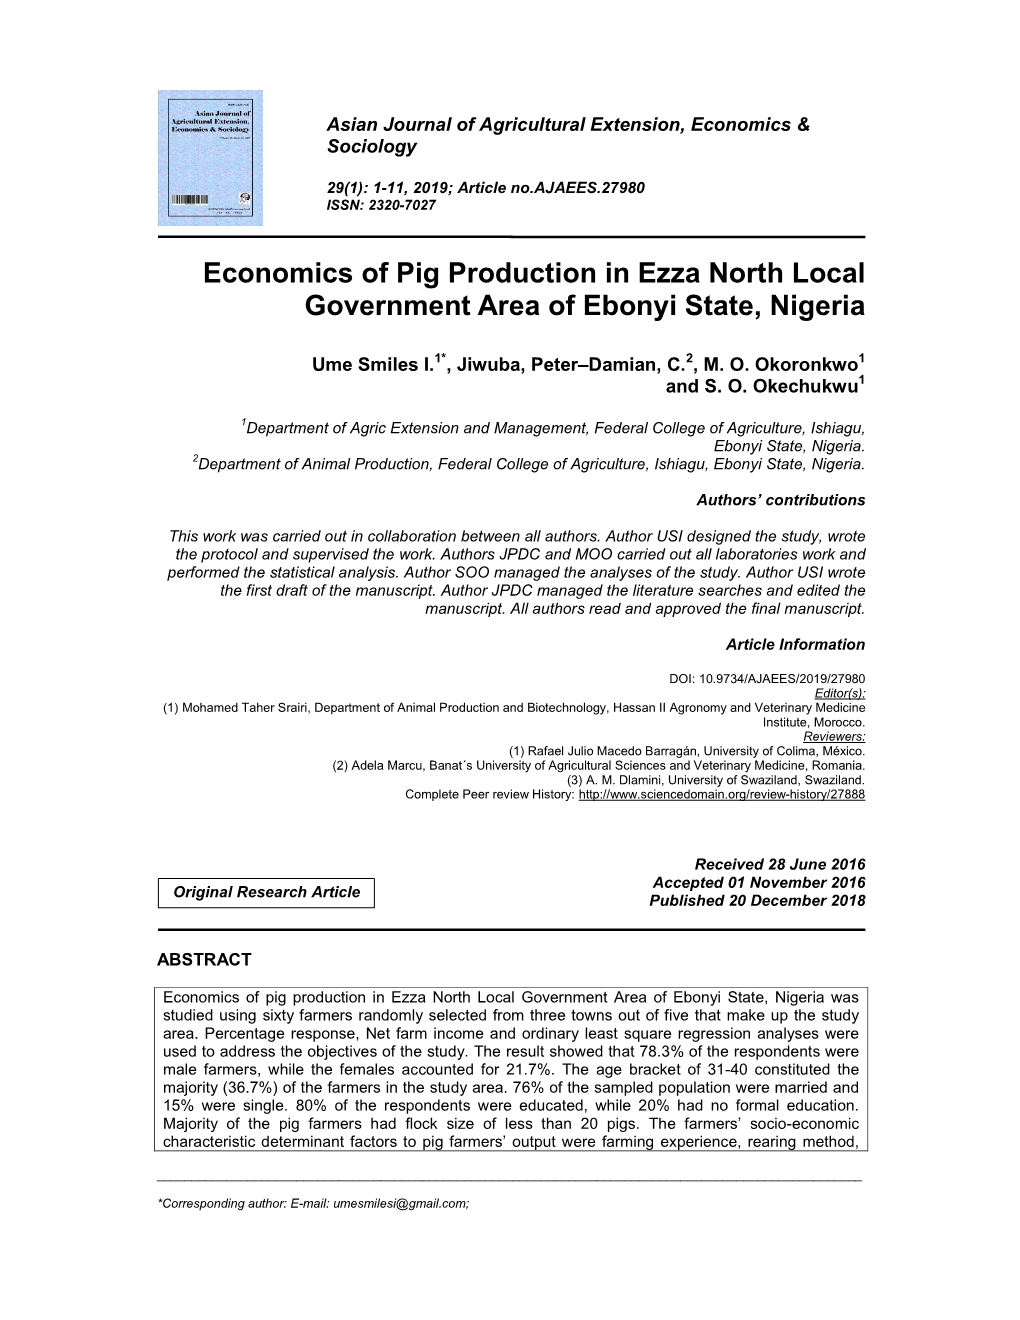 Economics of Pig Production in Ezza North Local Government Area of Ebonyi State, Nigeria